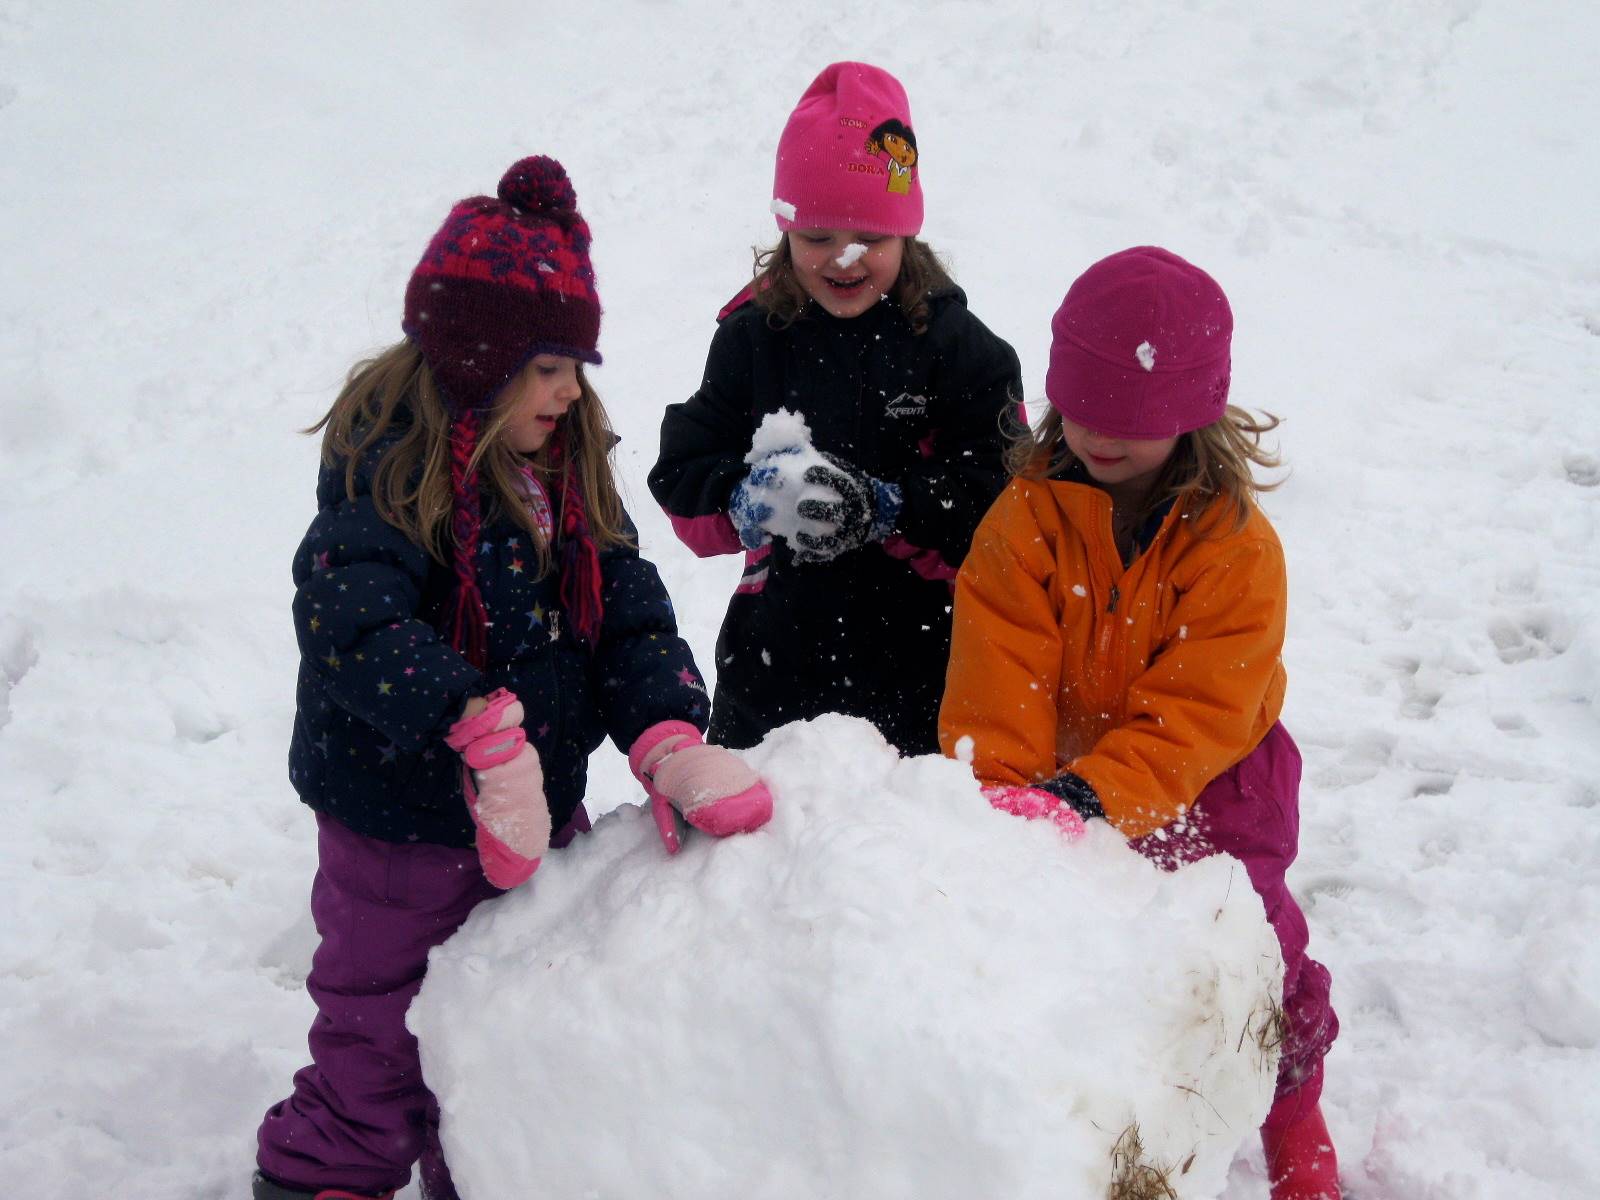 3 children building a snowman.